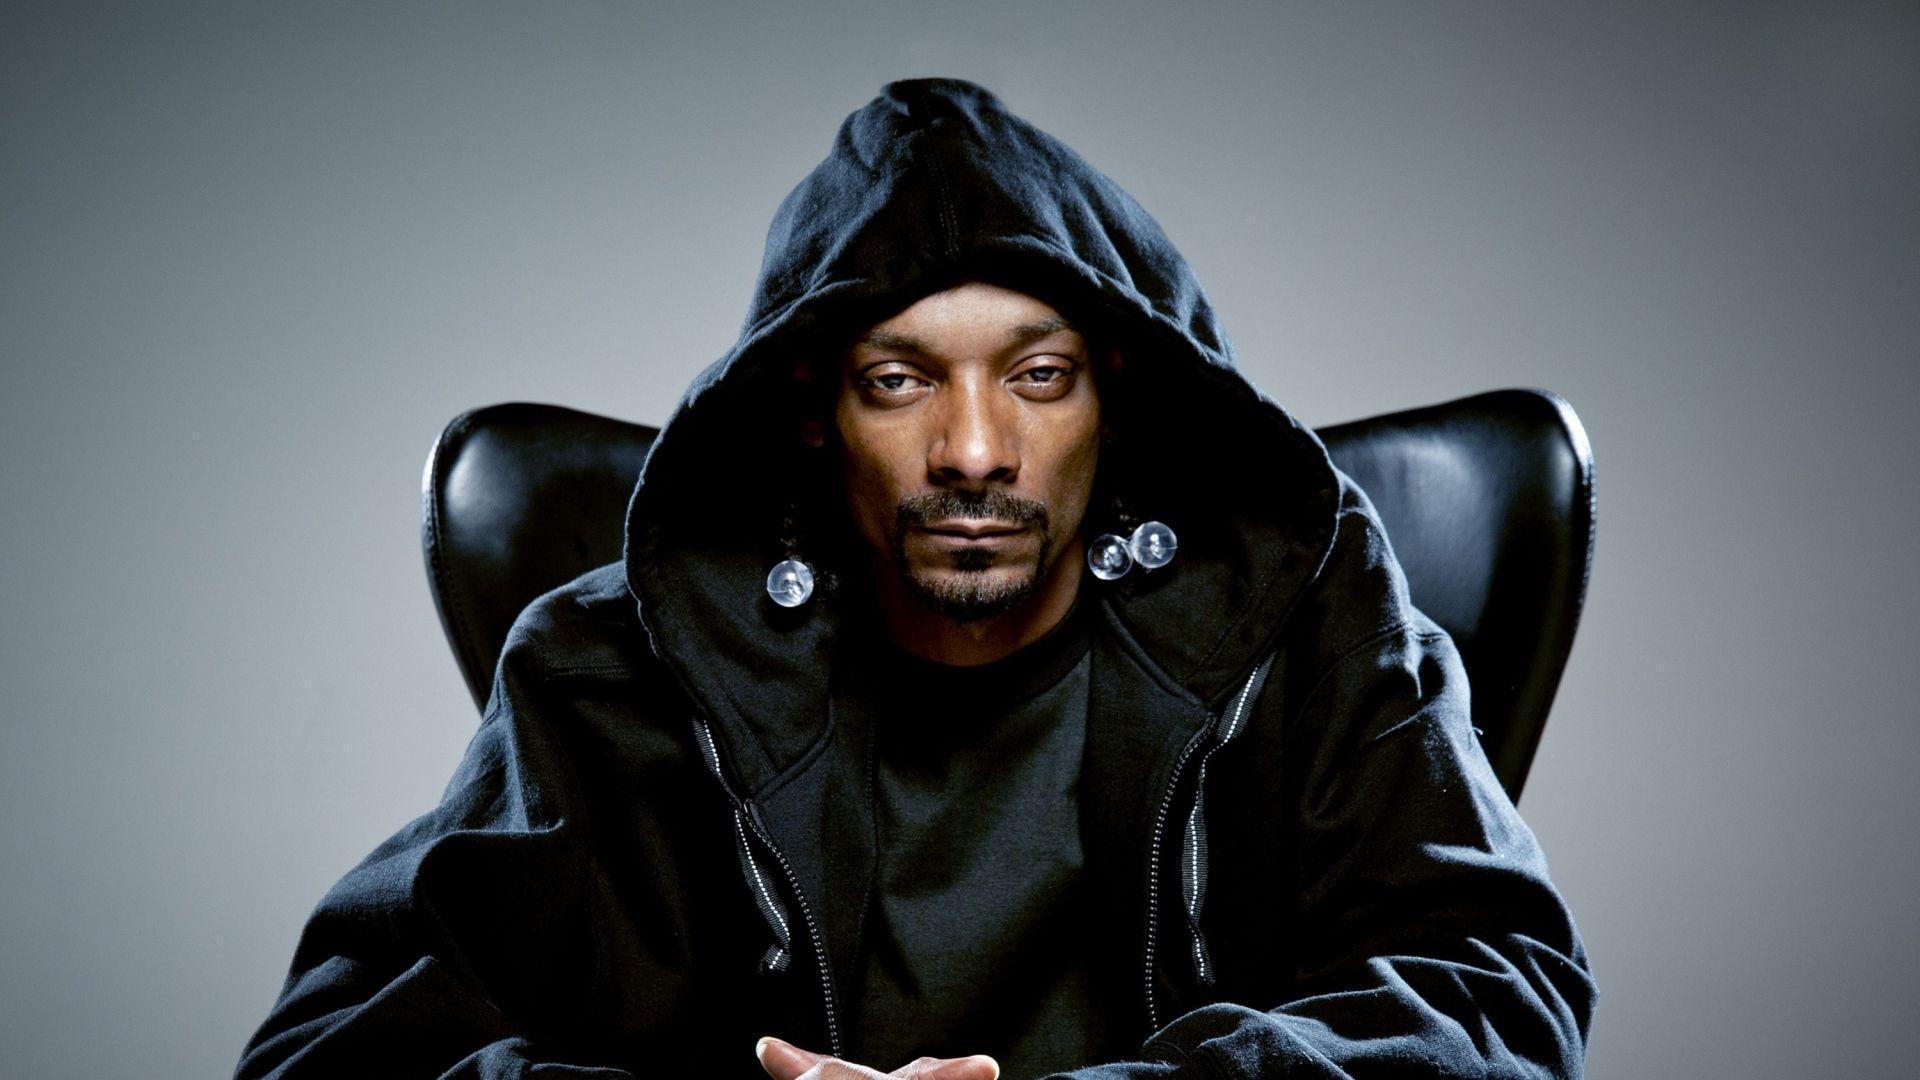 Snoop Dogg Wallpaper Free Snoop Dogg Background